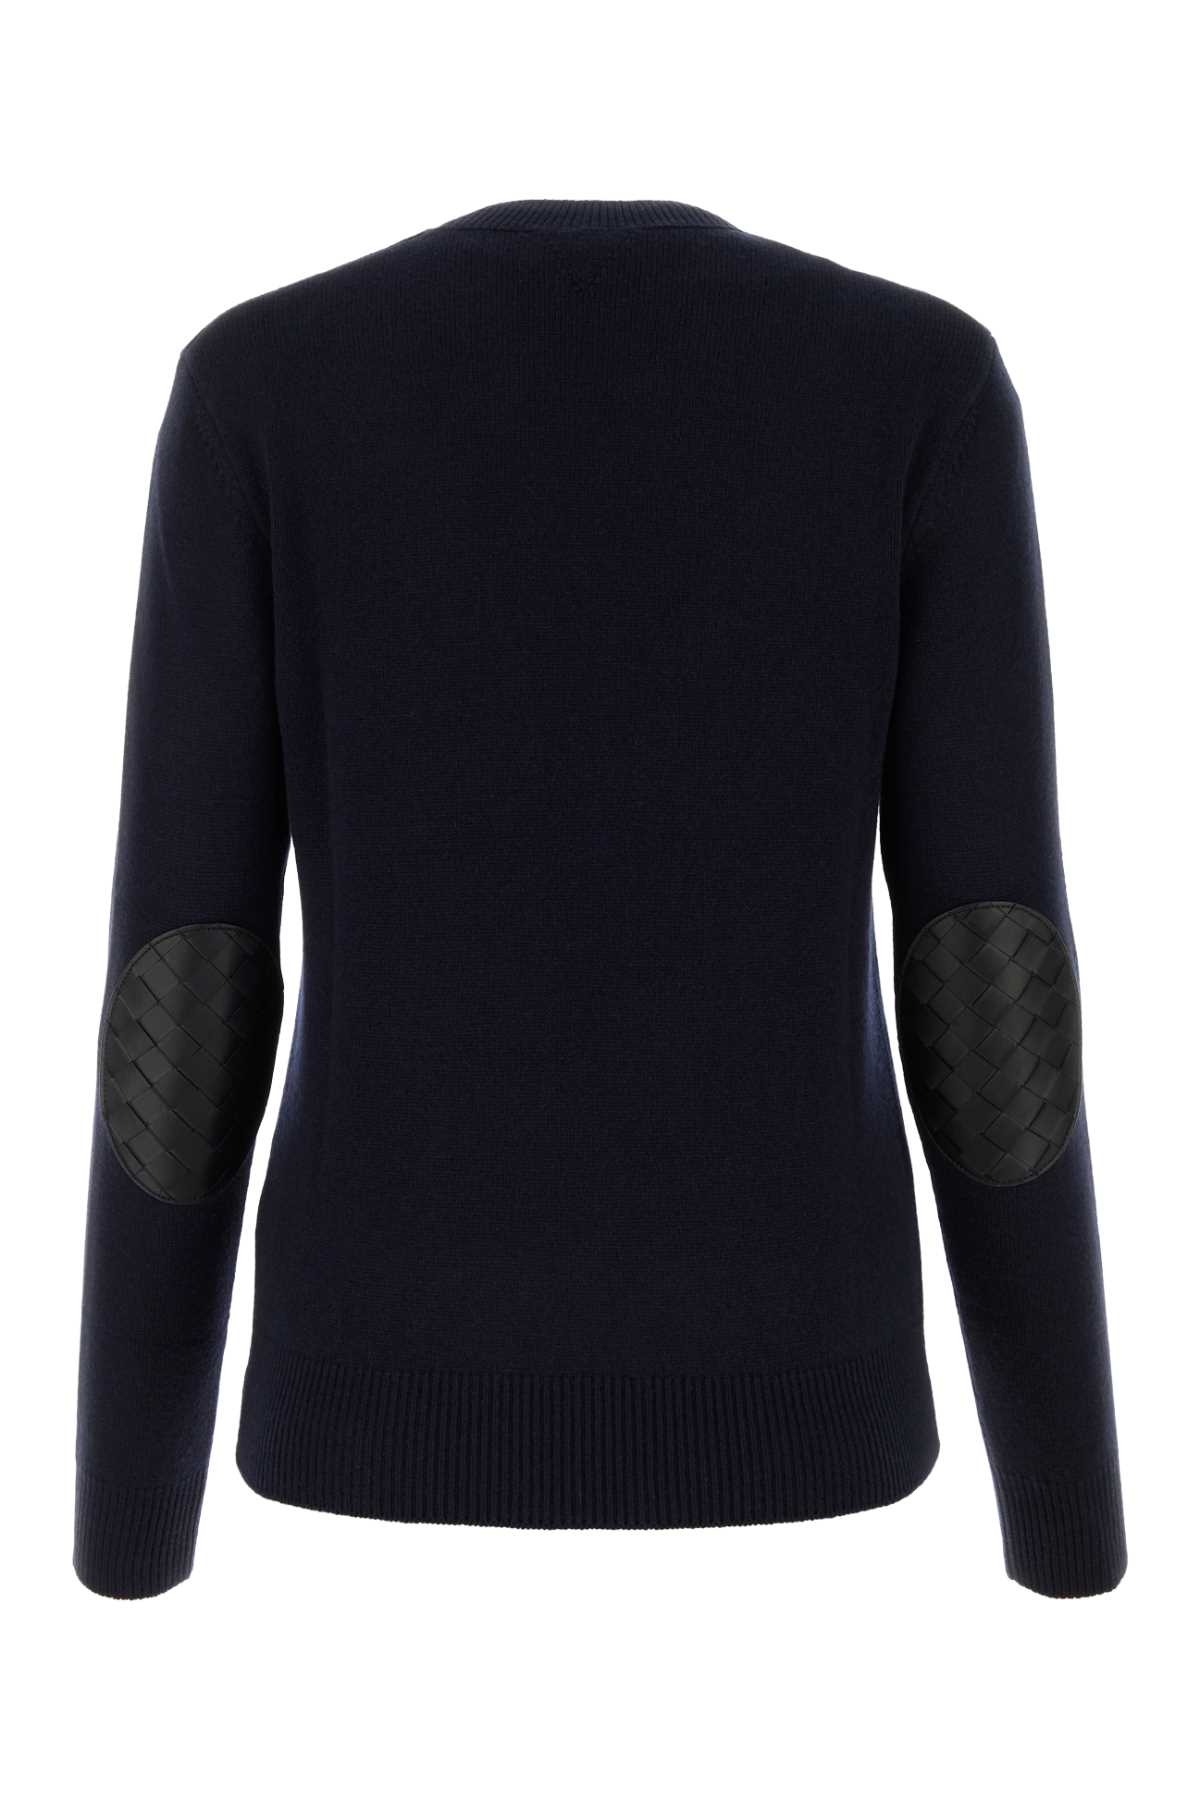 Shop Bottega Veneta Navy Blue Stretch Cashmere Blend Sweater